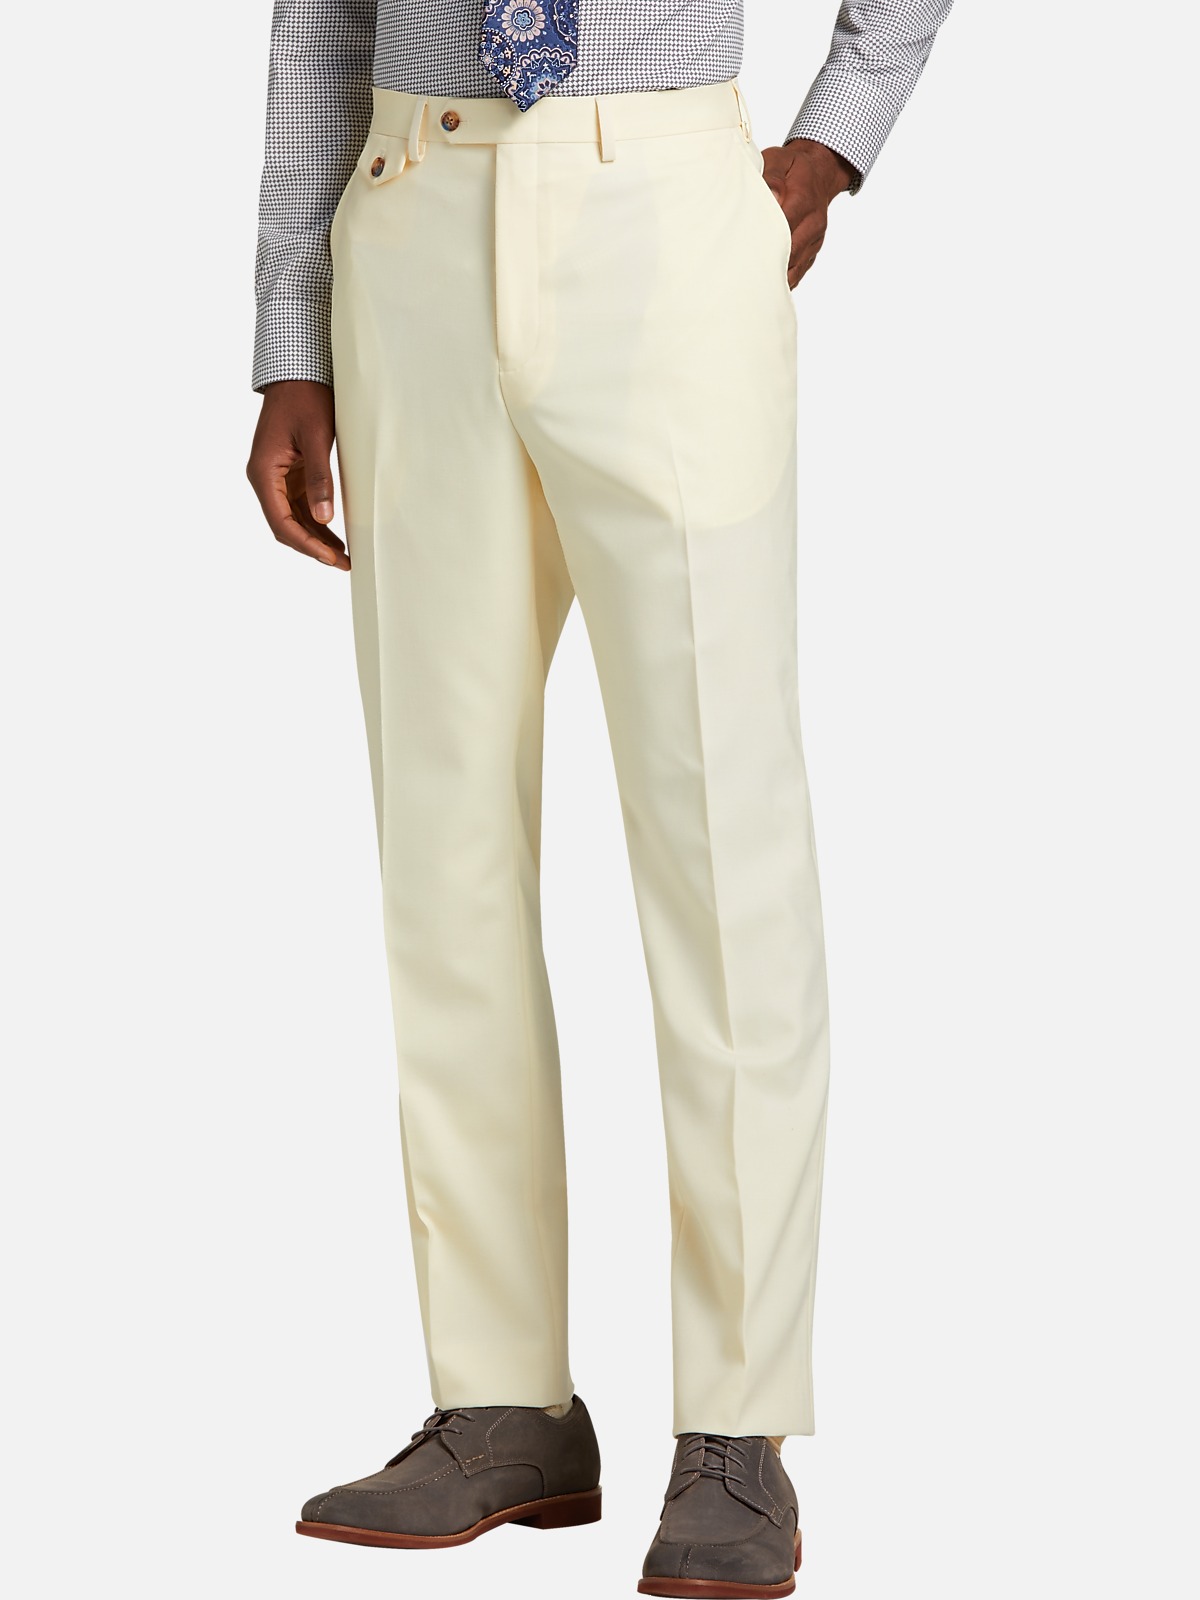 Haggar H26 Men's Premium Stretch Classic Fit Dress Pants - Khaki 36x32